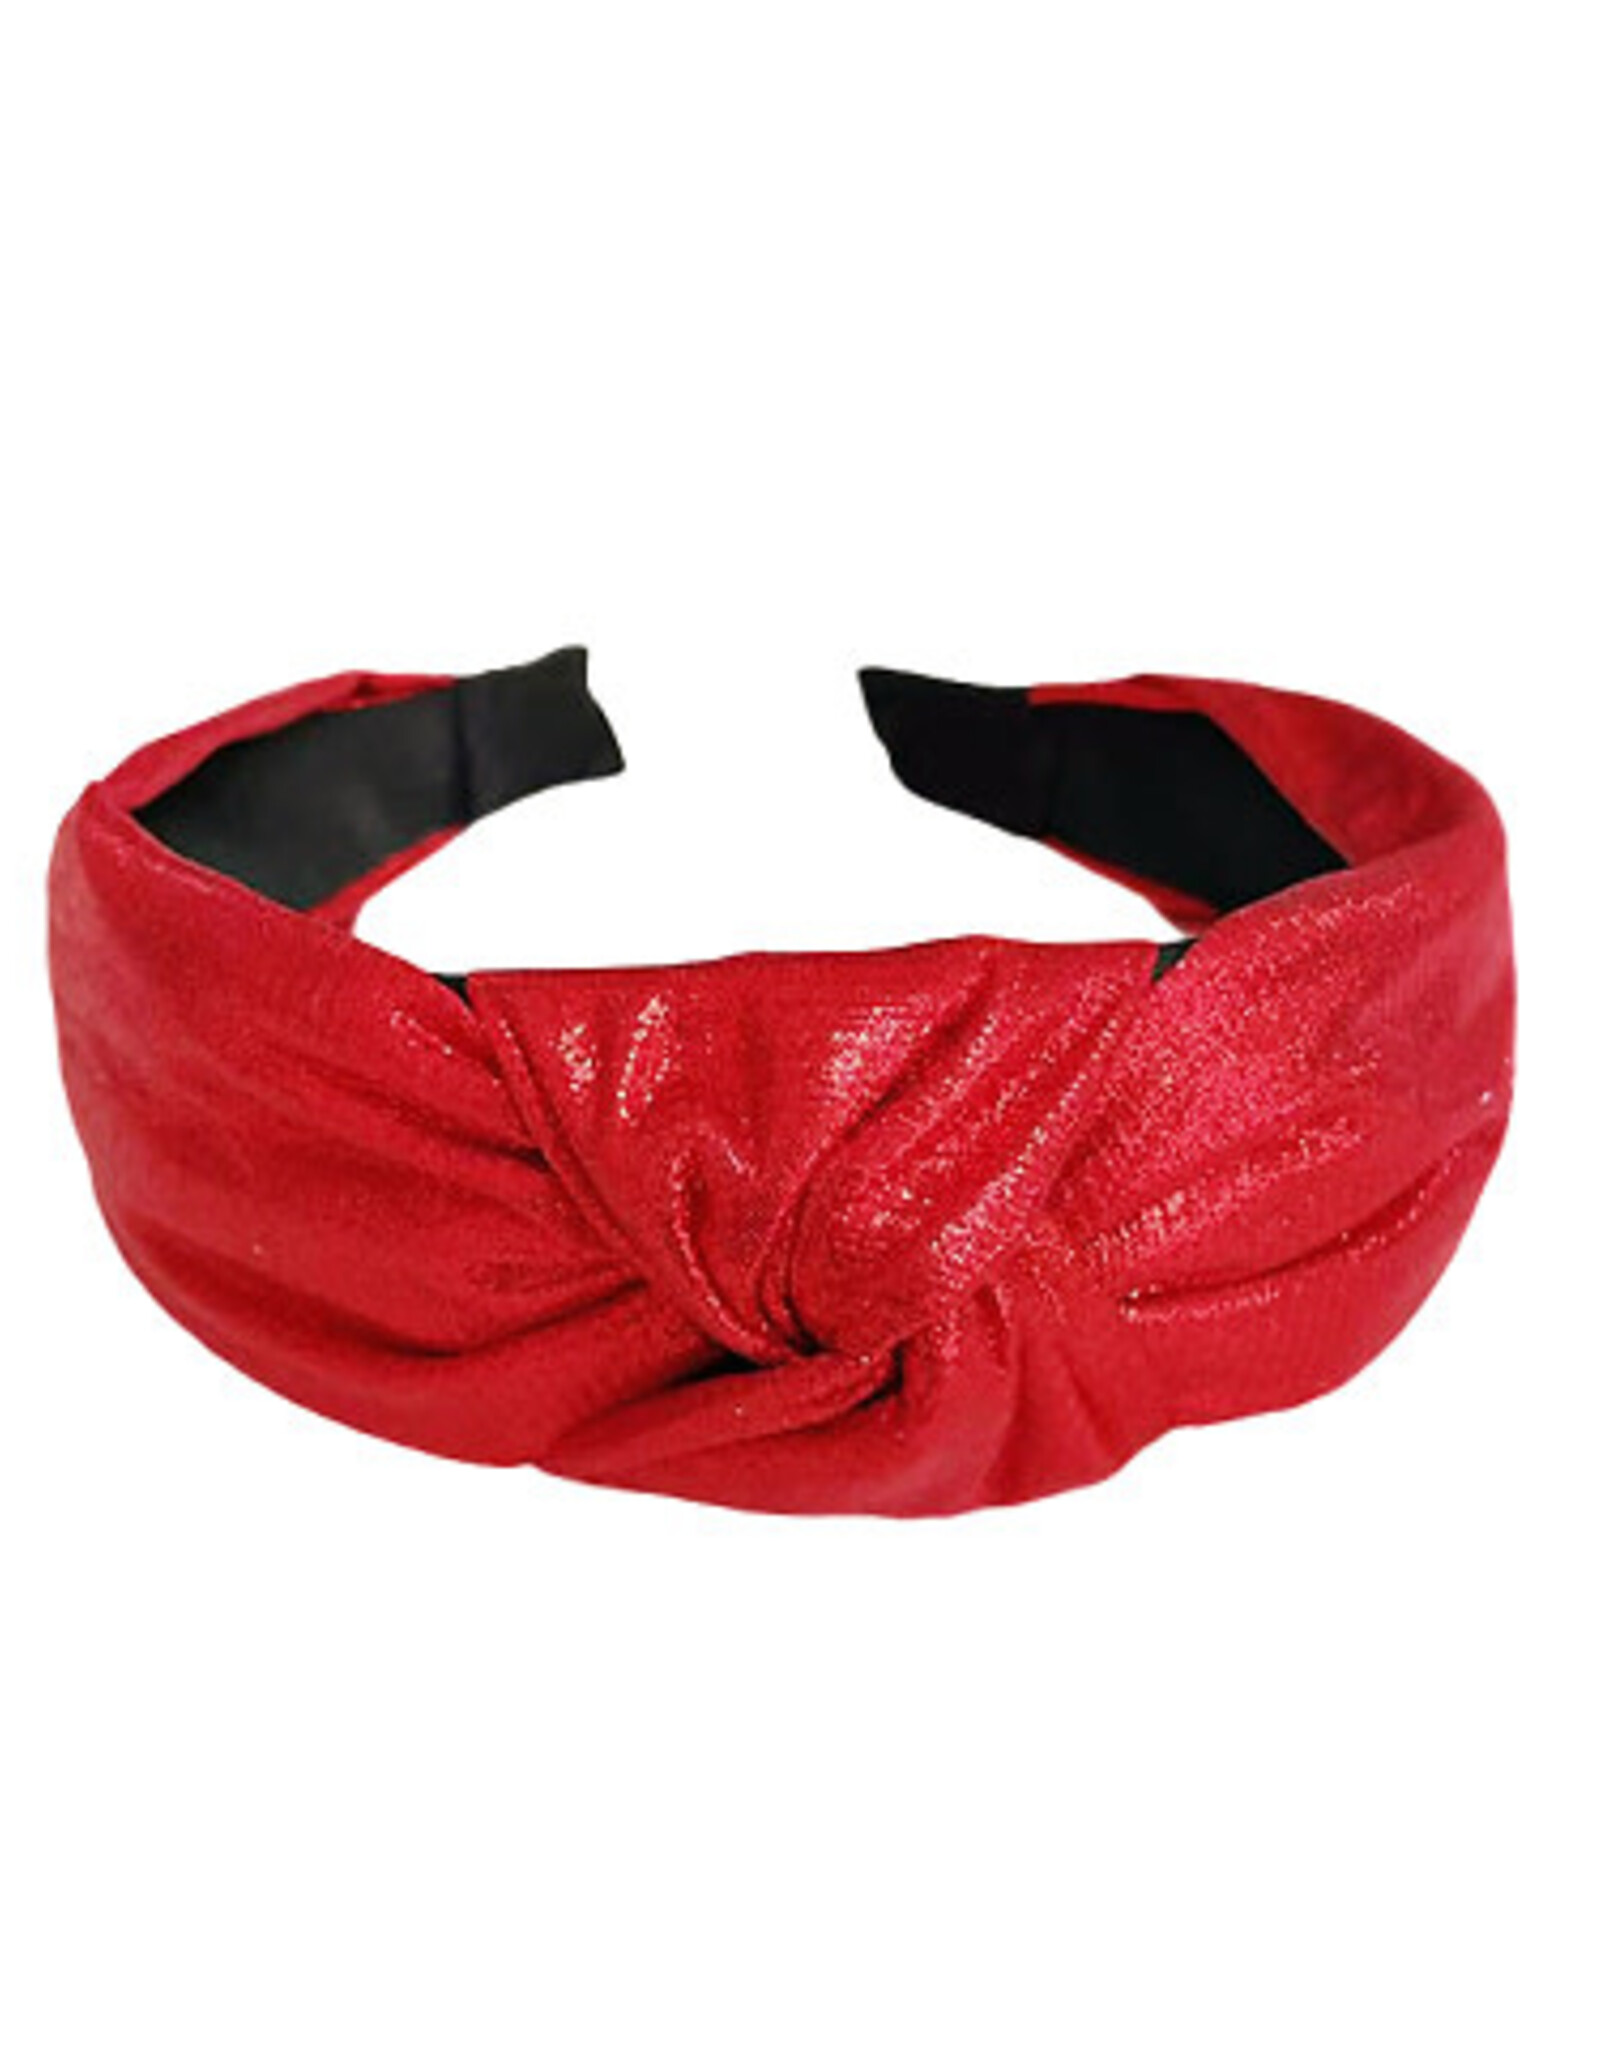 Metallic Knot Headband in Red